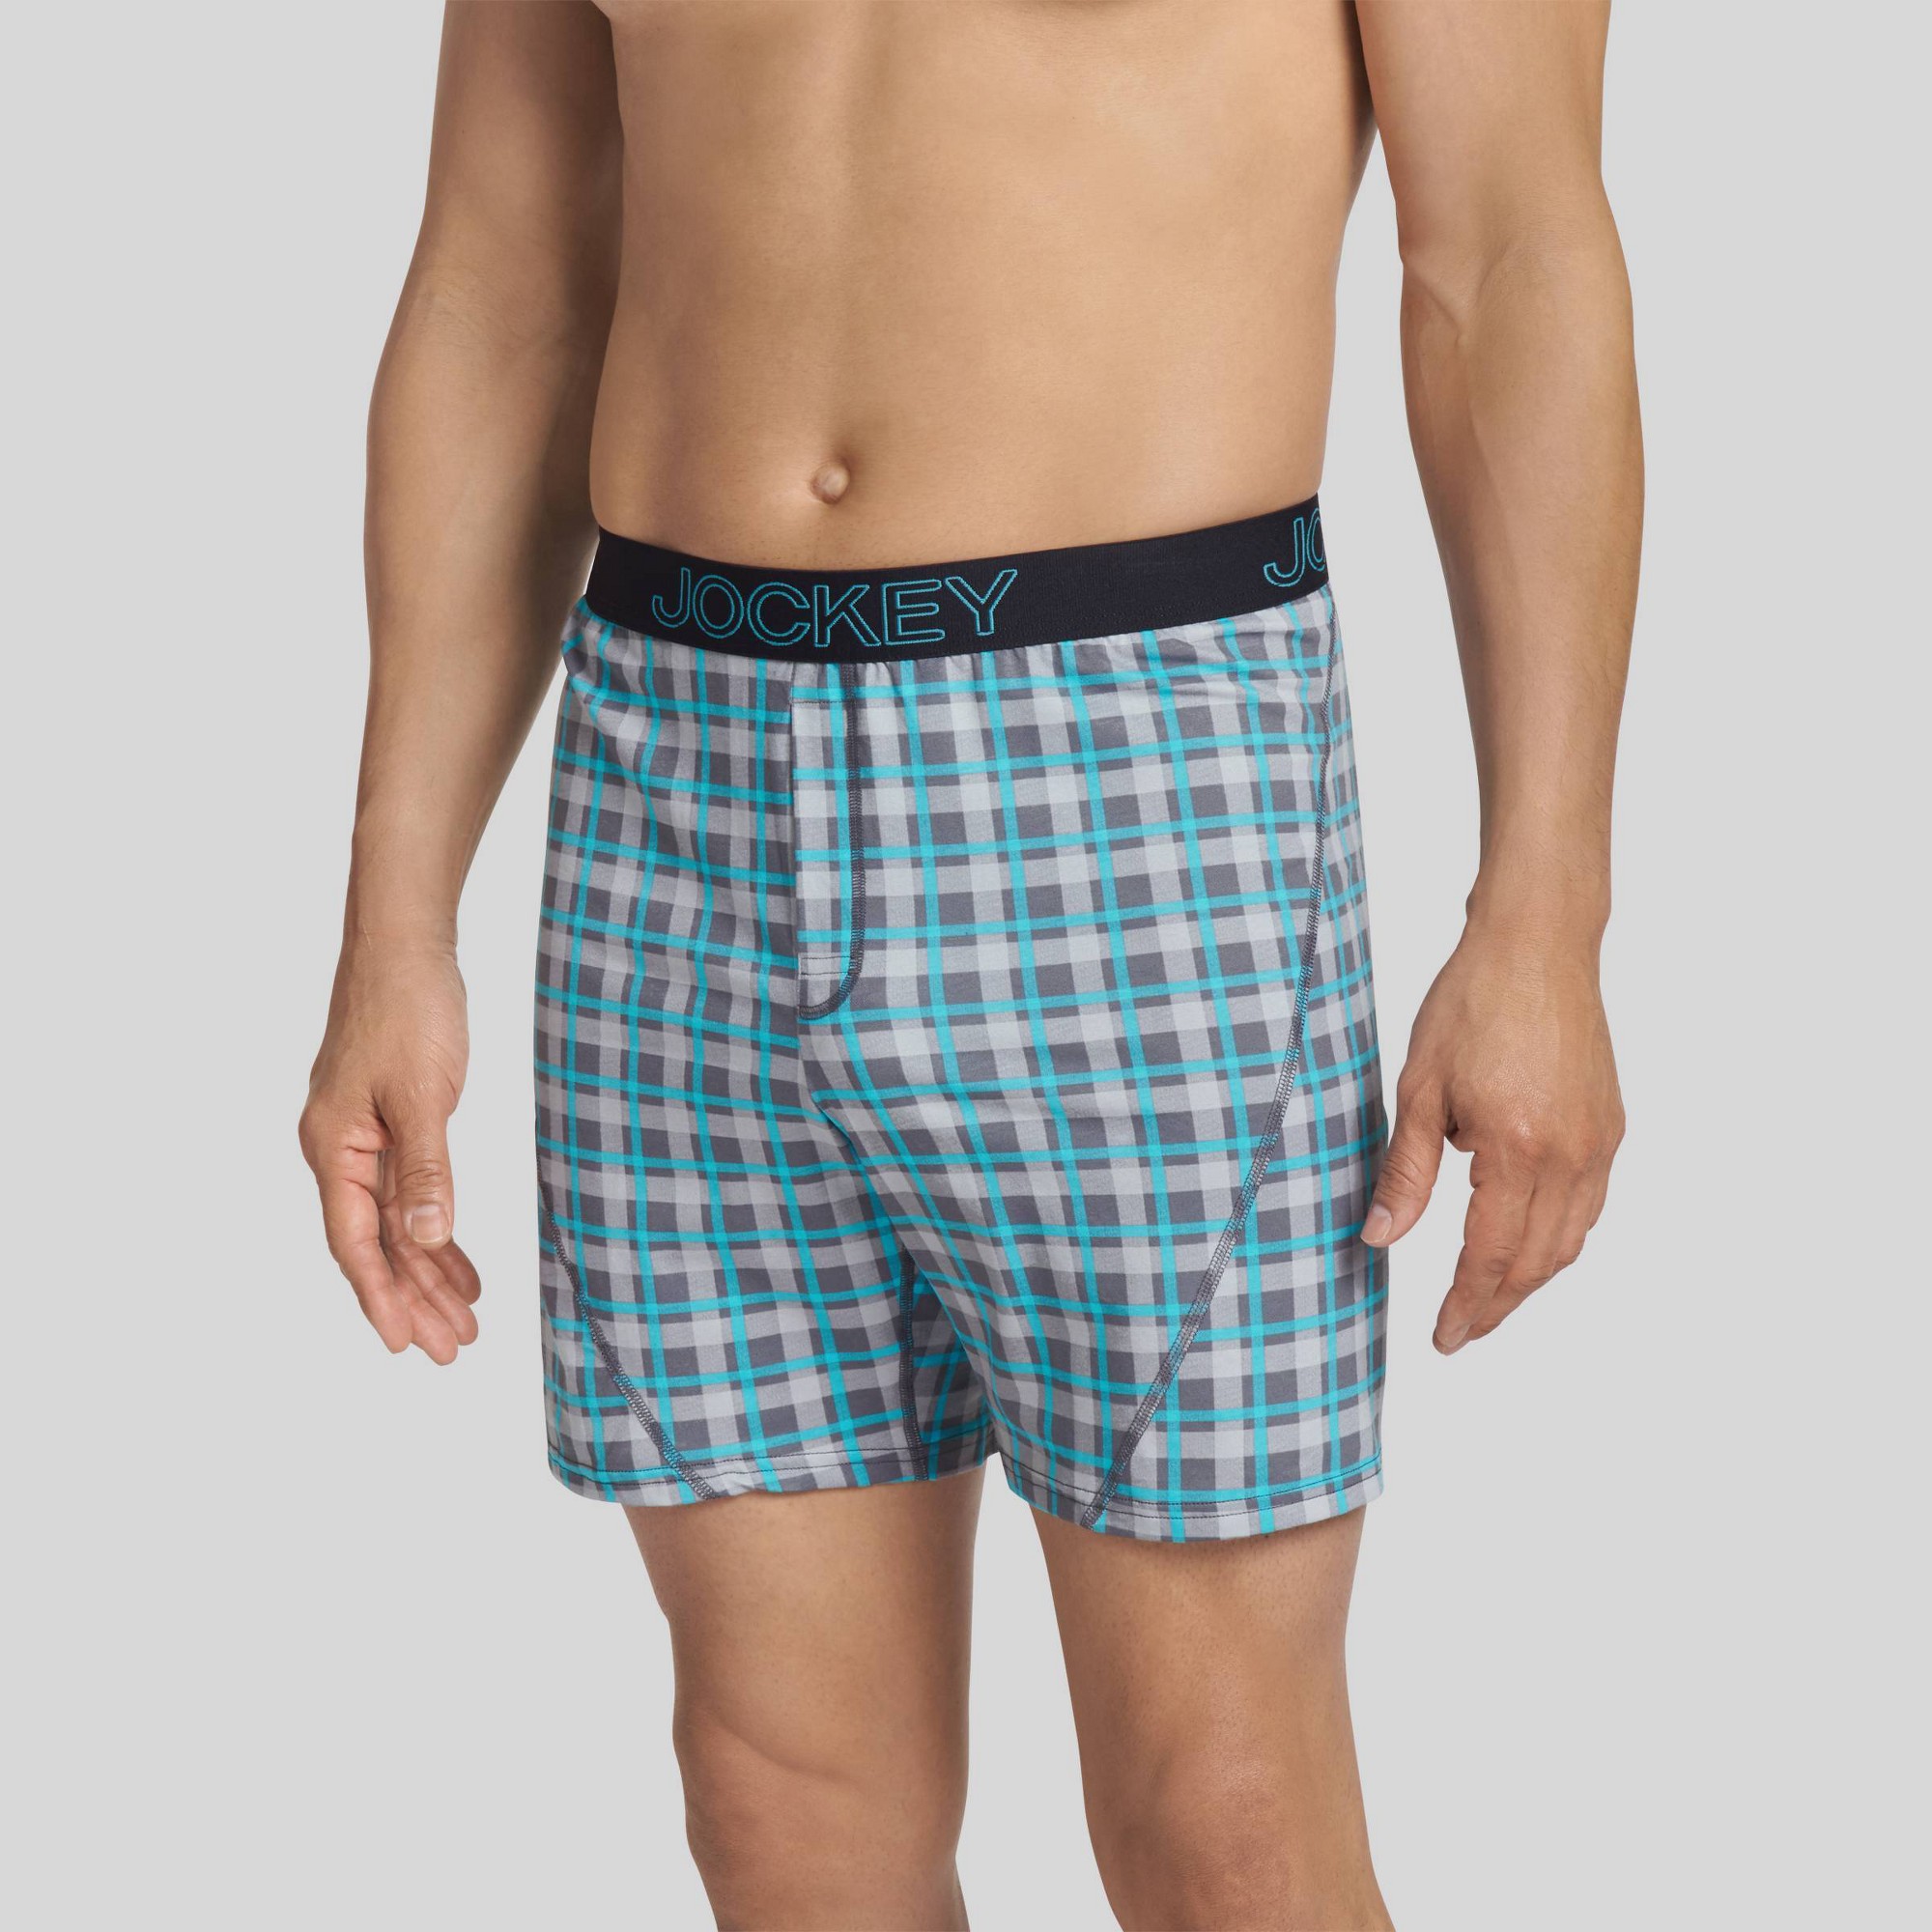 Jockey Generation Men's No Bunch Boxer Shorts - Plaid M, Size: Medium, by Jockey  Generation